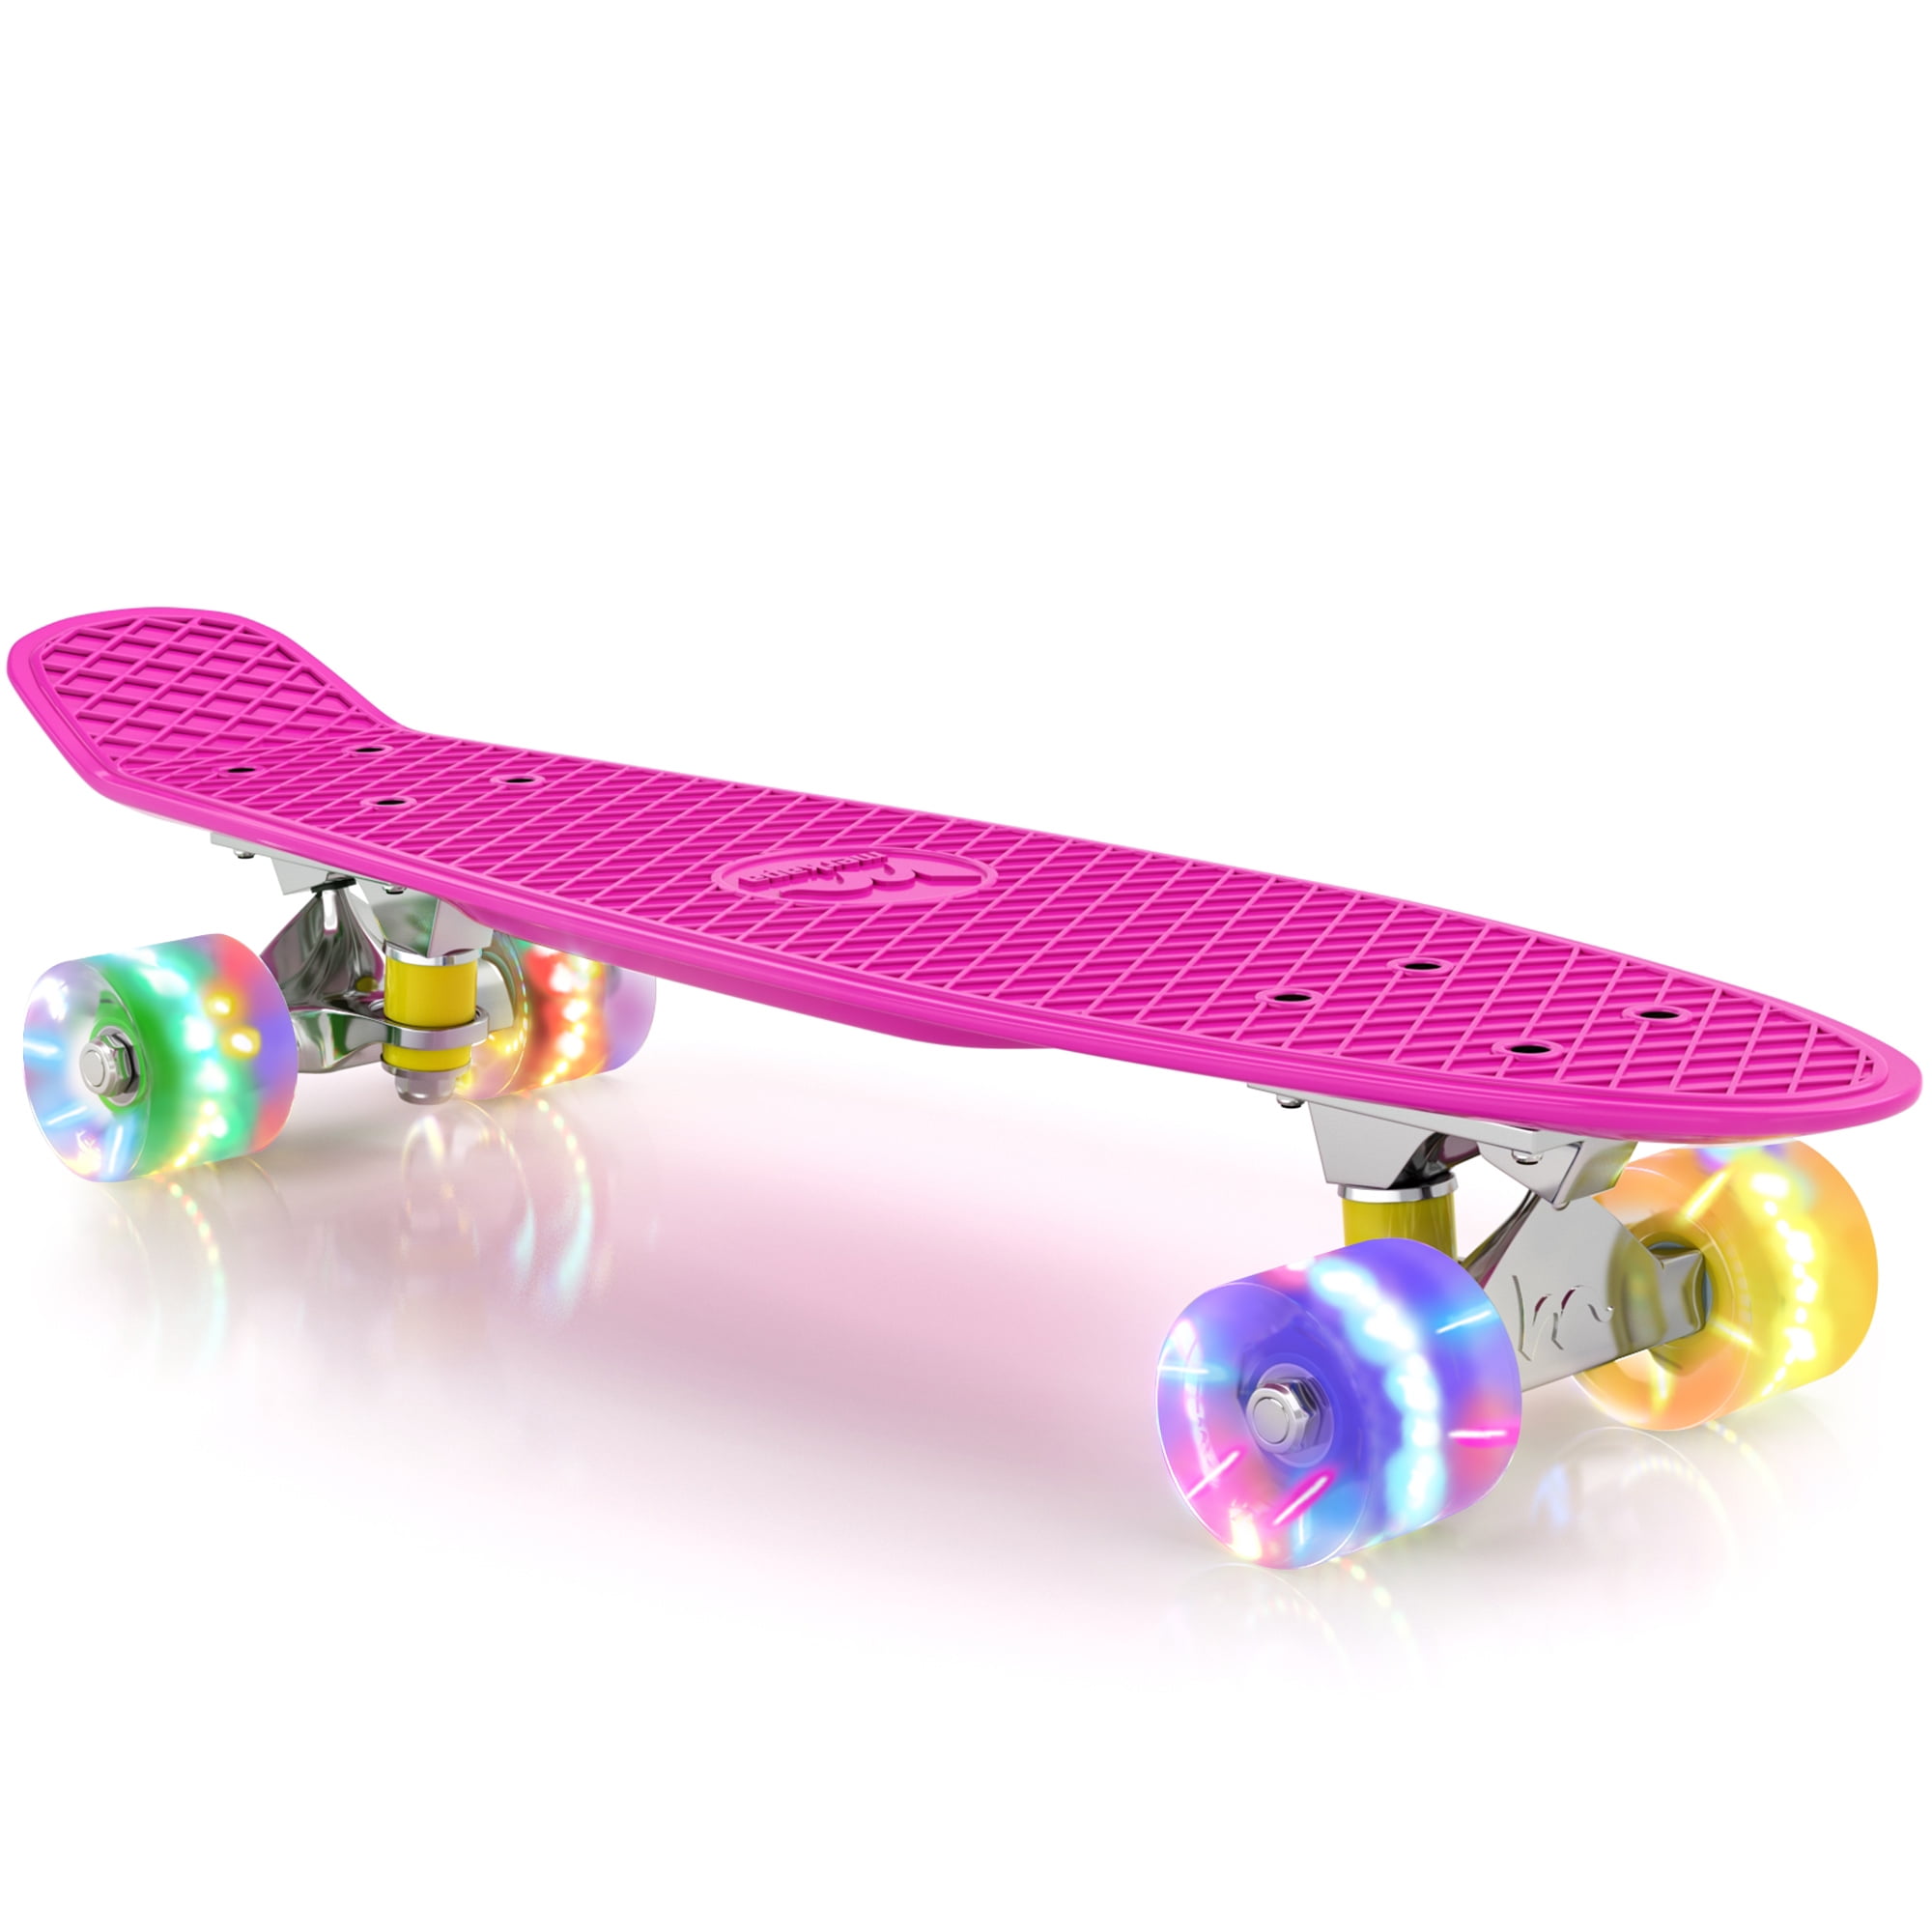 Rainbow M Merkapa Complete 22 inch Cruiser Skateboard for Youth Beginners 